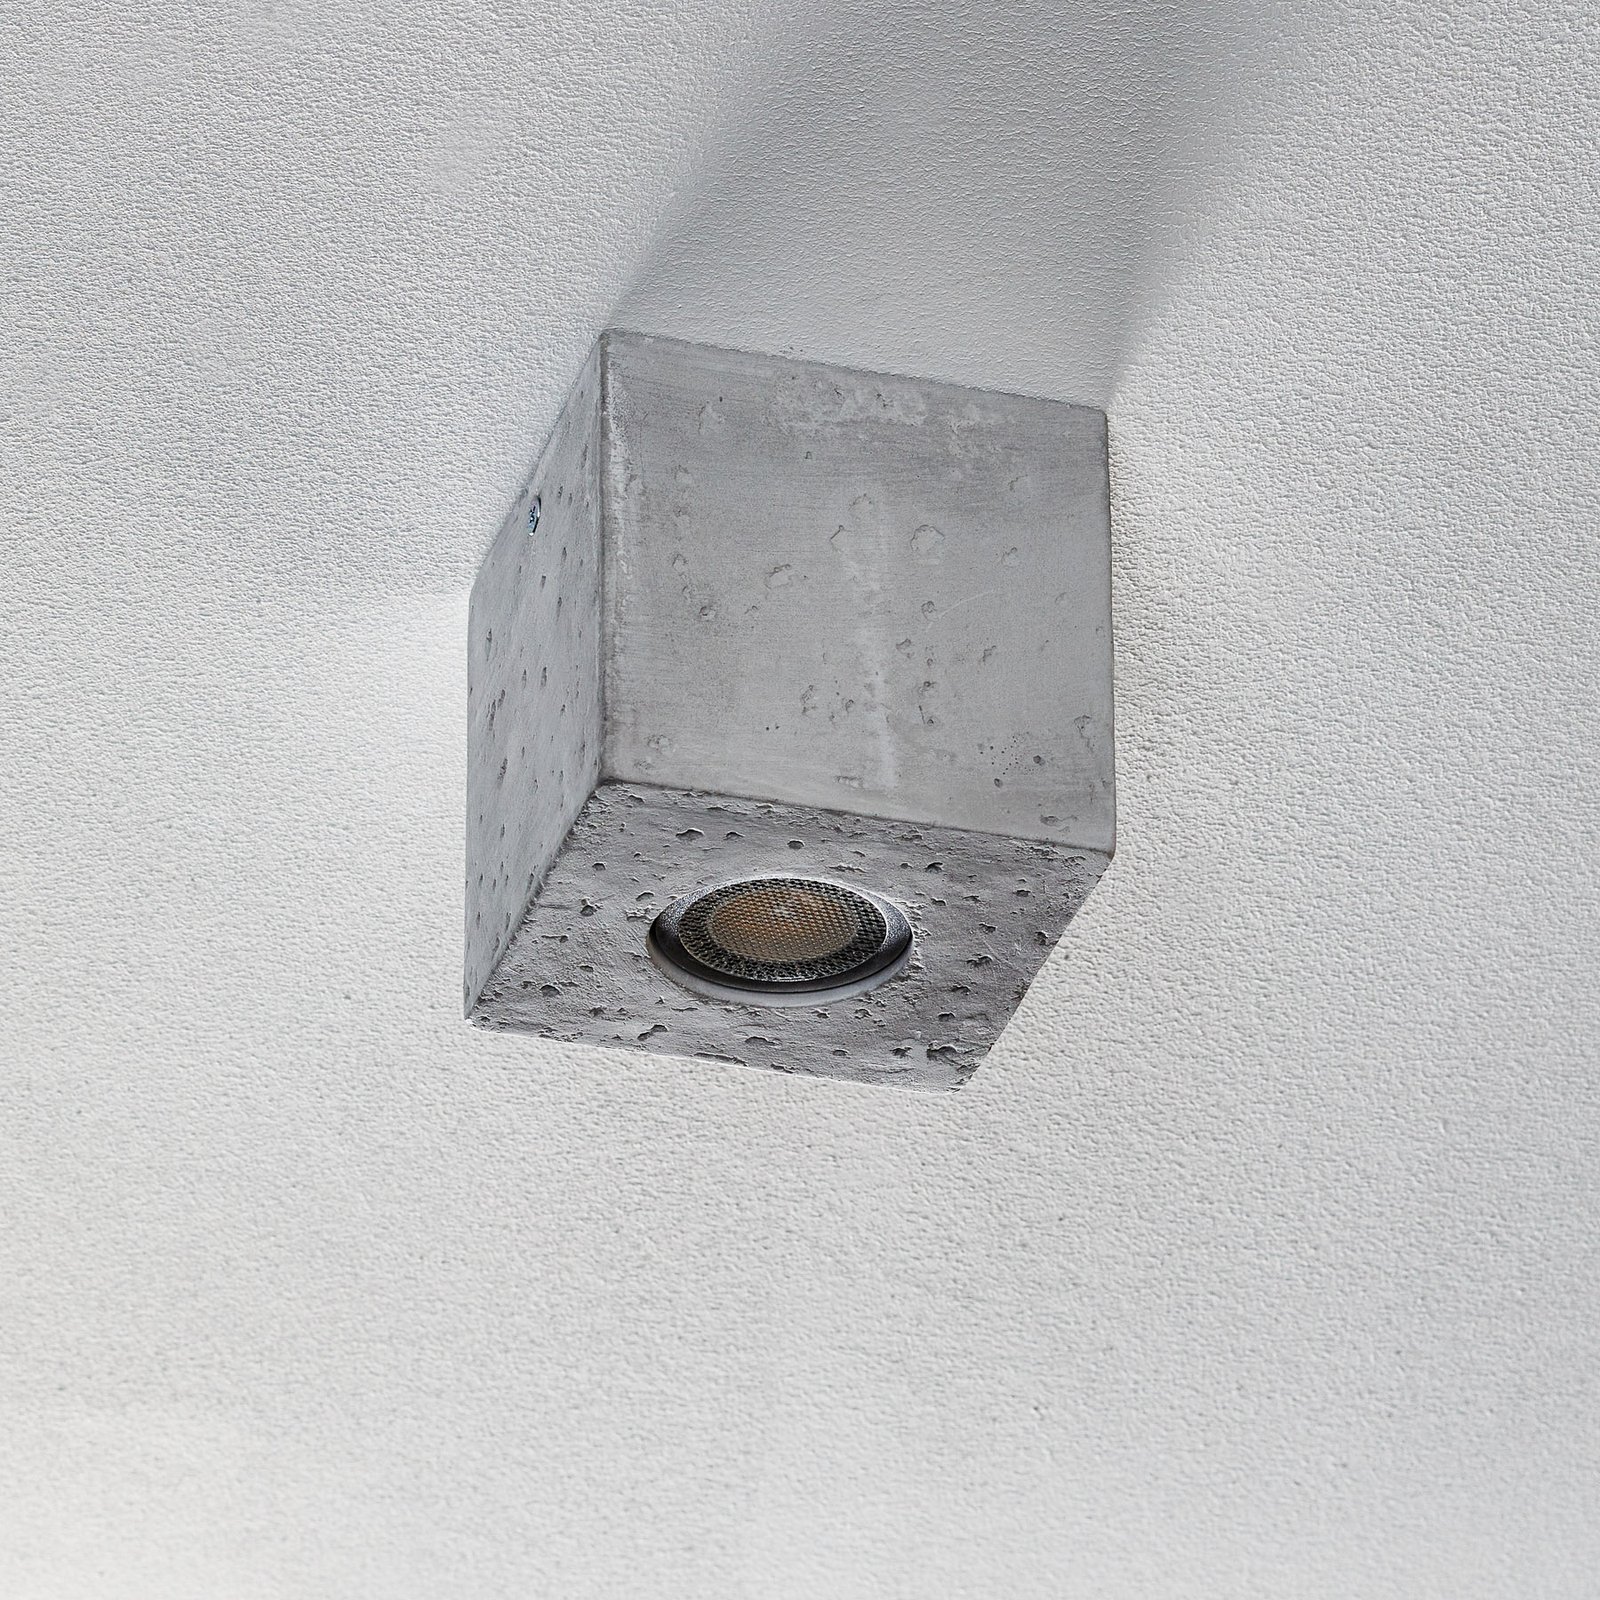 Ara ceiling light as a concrete cube 10cm x 10cm